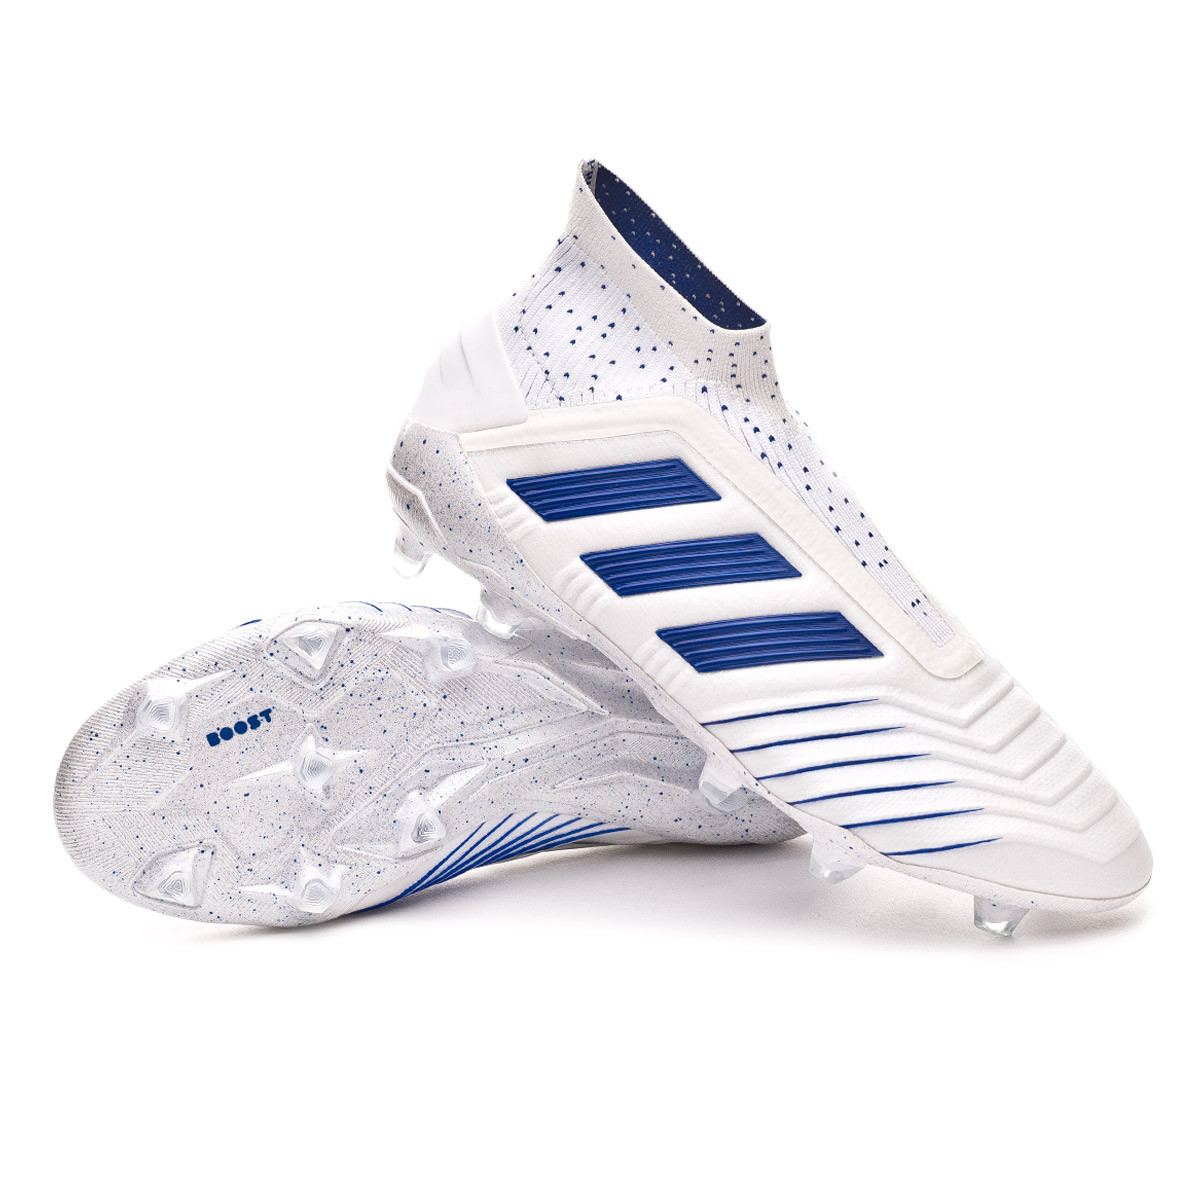 adidas white football shoes